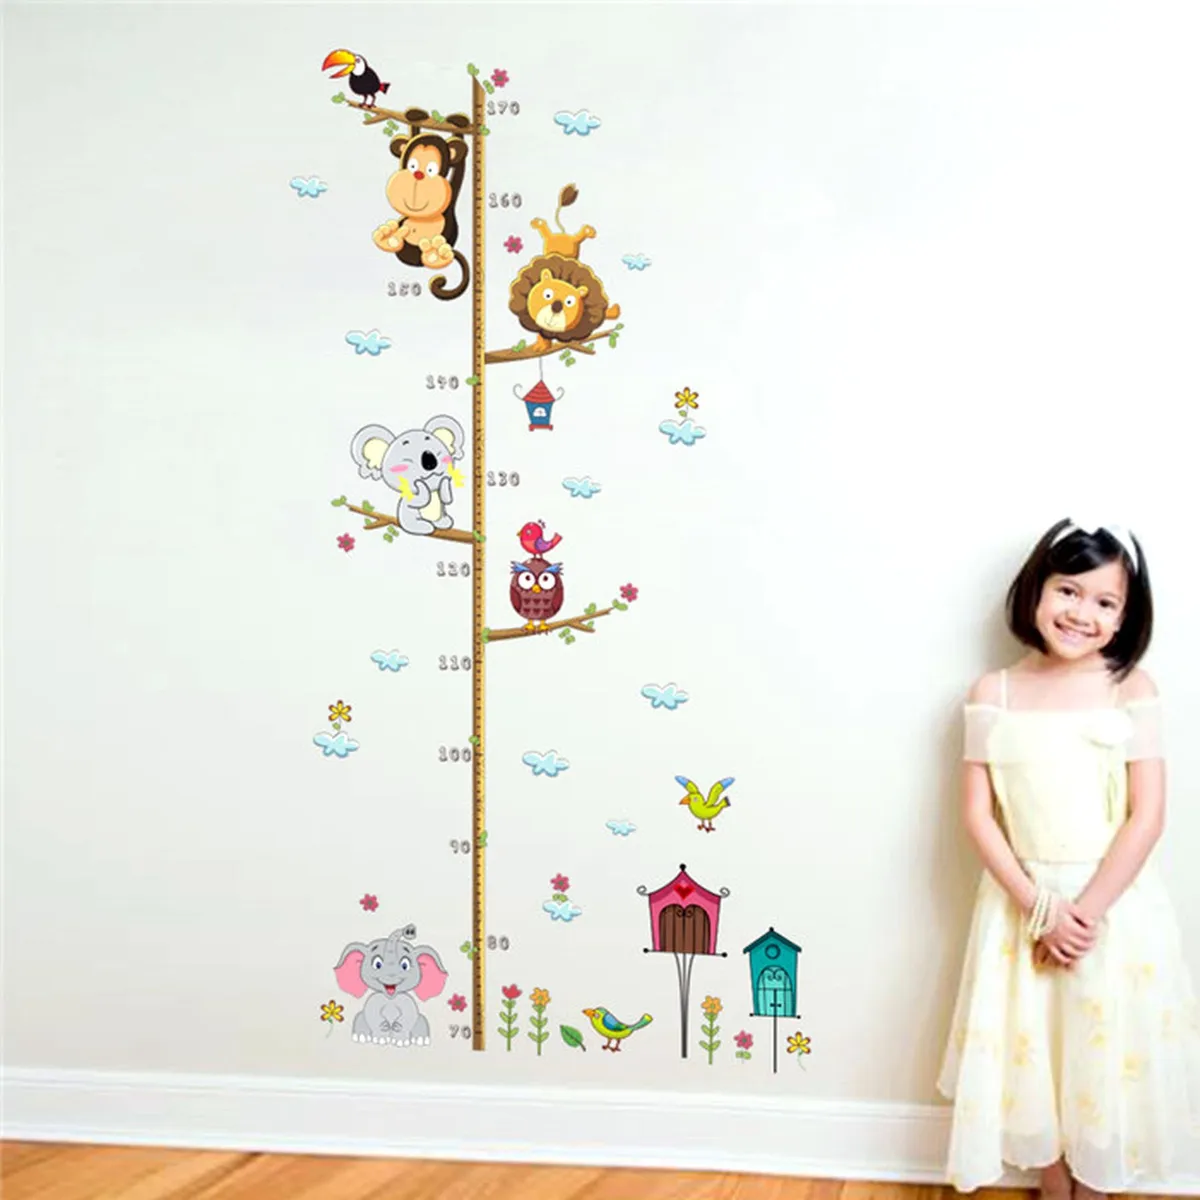 Meßlatte Kinder Kinderzimmer Wandtattoo Wandsticker Messlatte Größe messen  | eBay